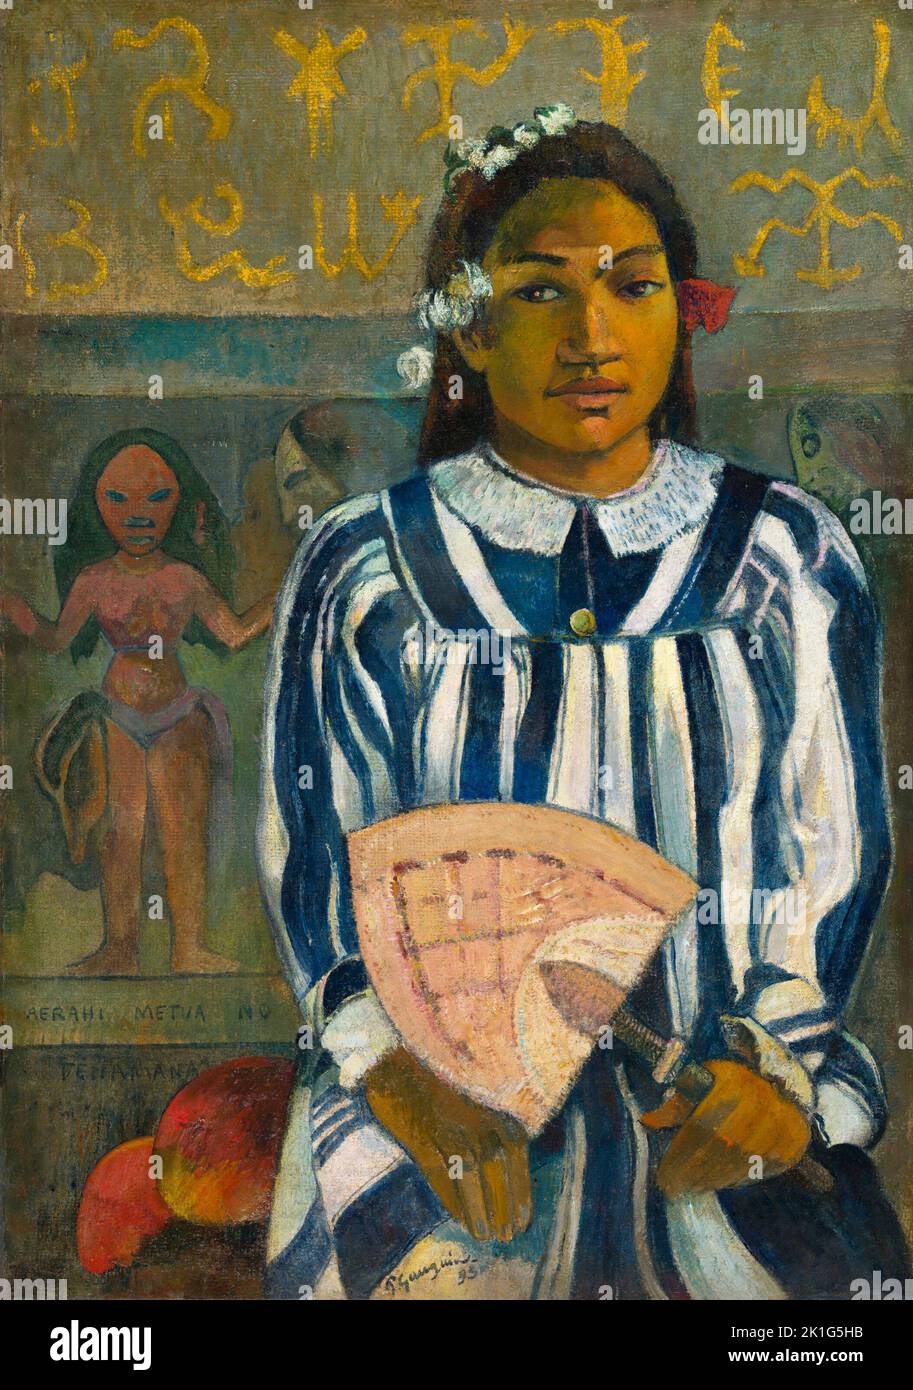 Merahi metua no Tehamana (Tehamana Has Many Parents or The Ancestors of Tehamana). Paul Gauguin. 1893. Stock Photo